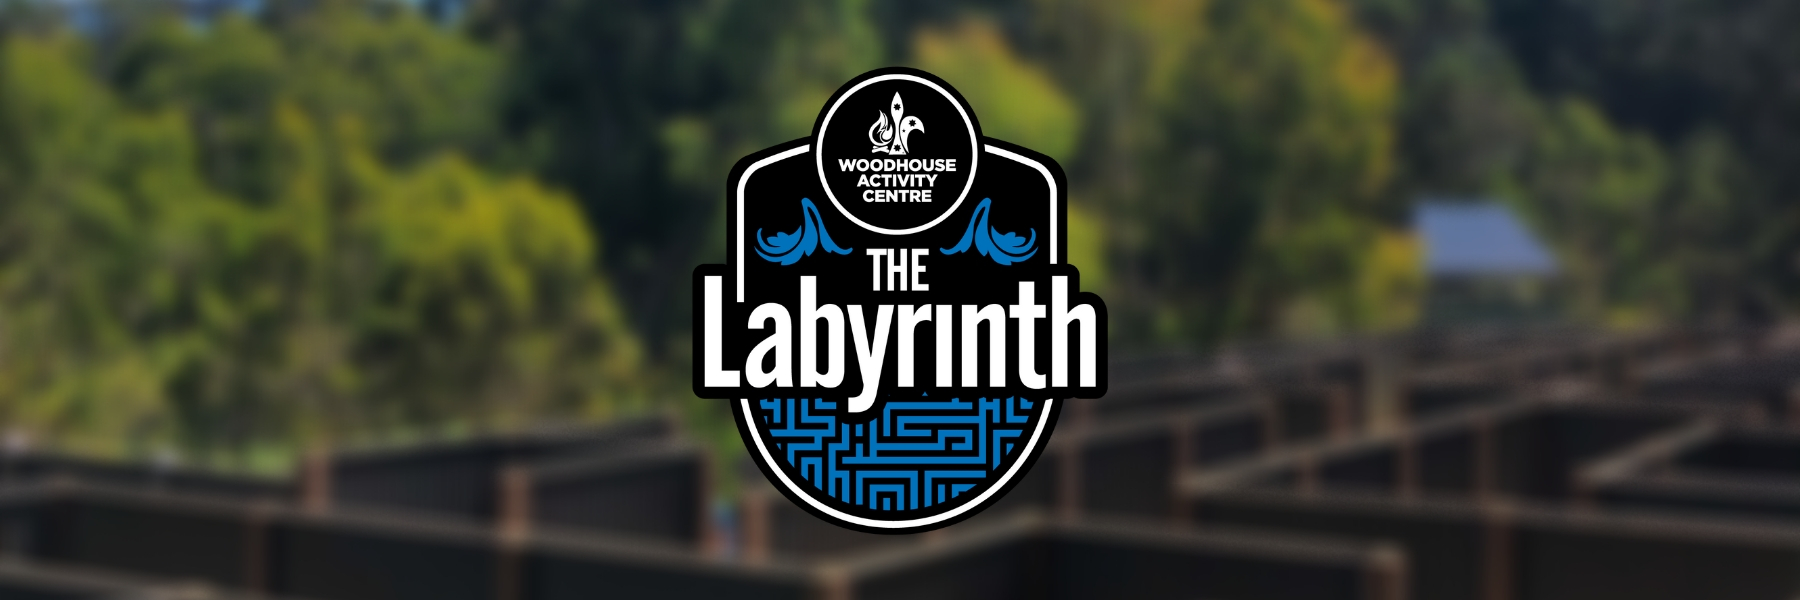 Labyrinth3